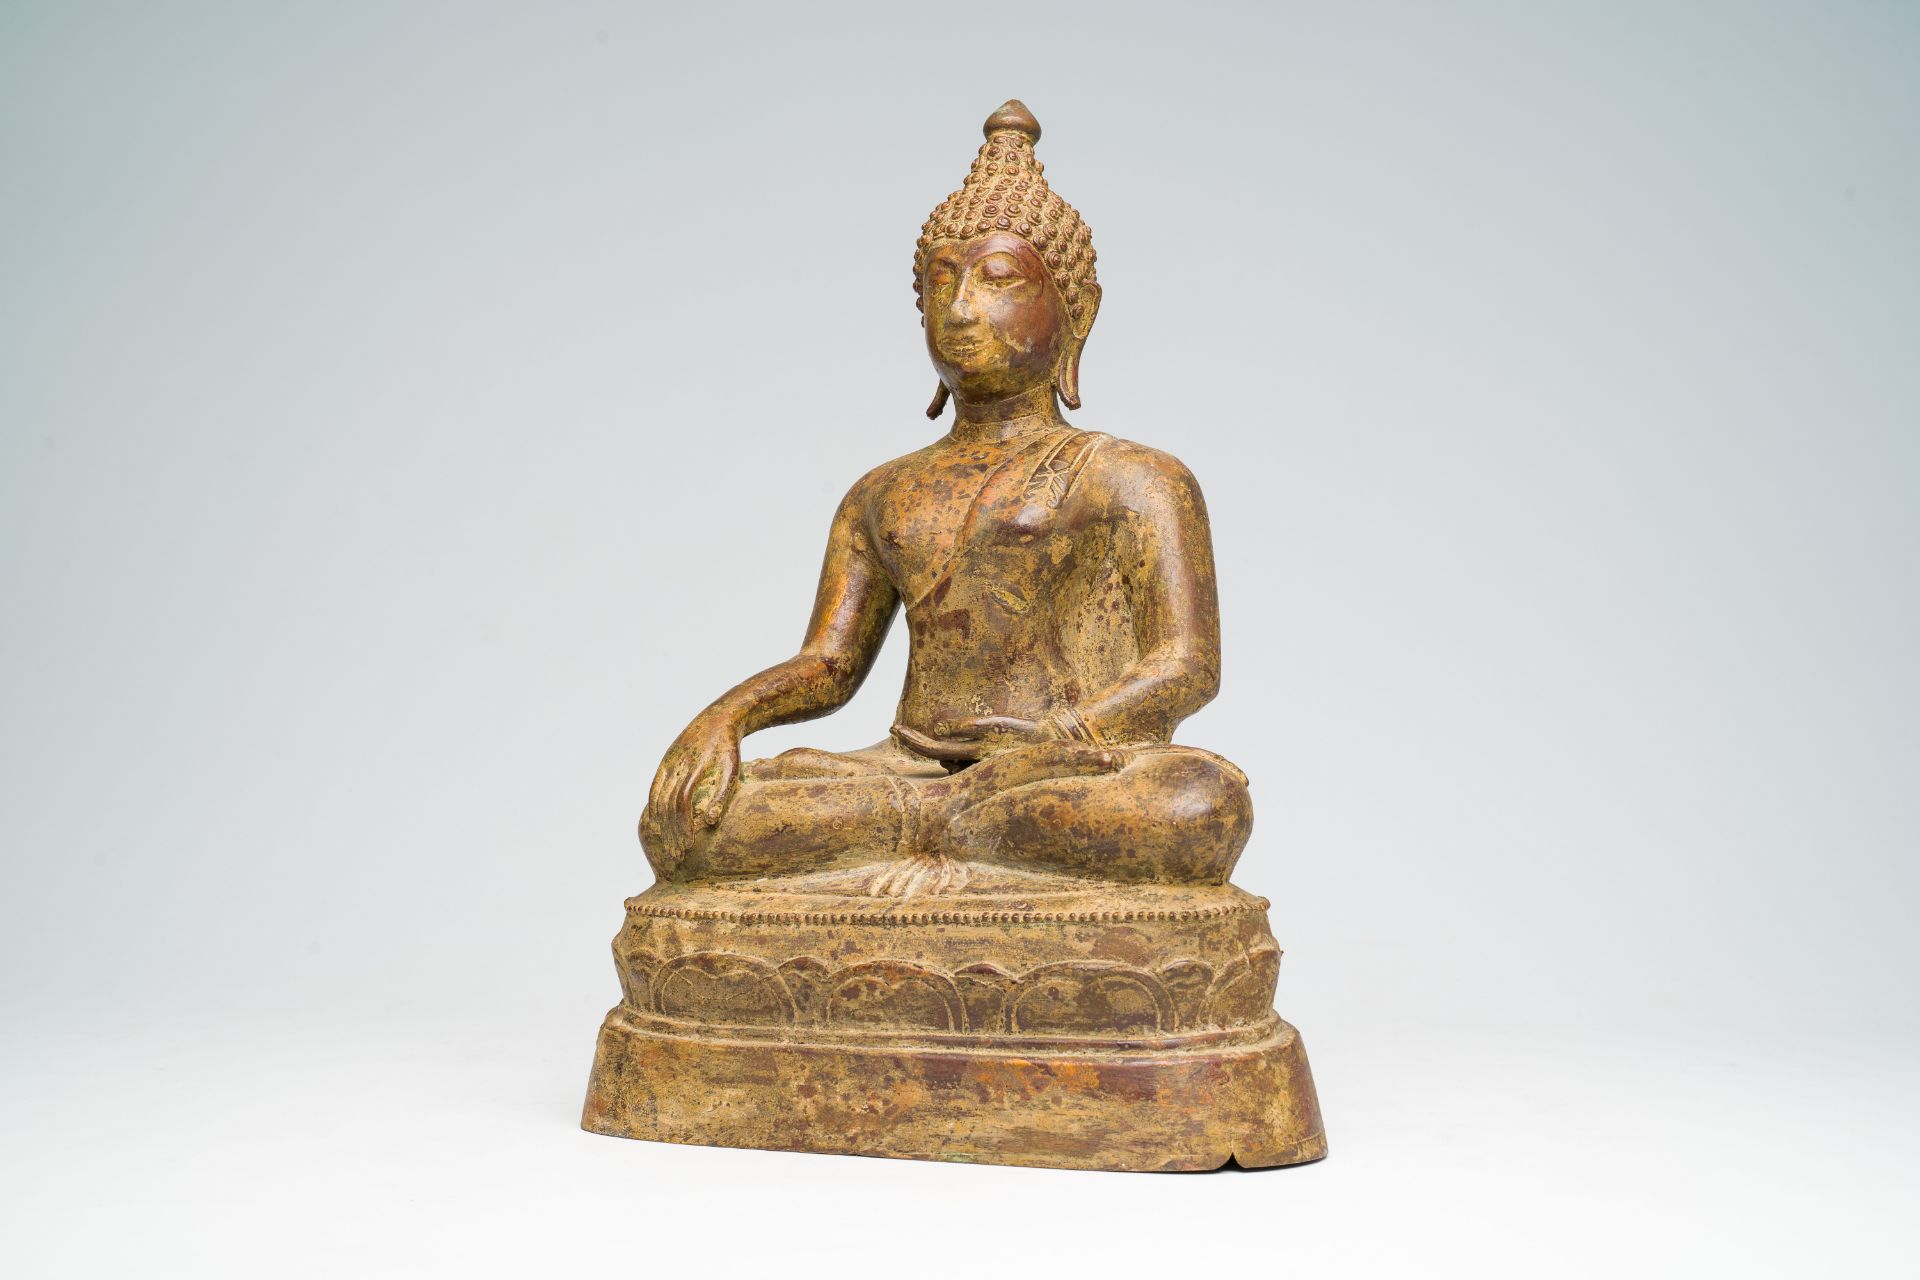 A Thai bronze Buddha in Ayutthaya-style, 18th/19th C.